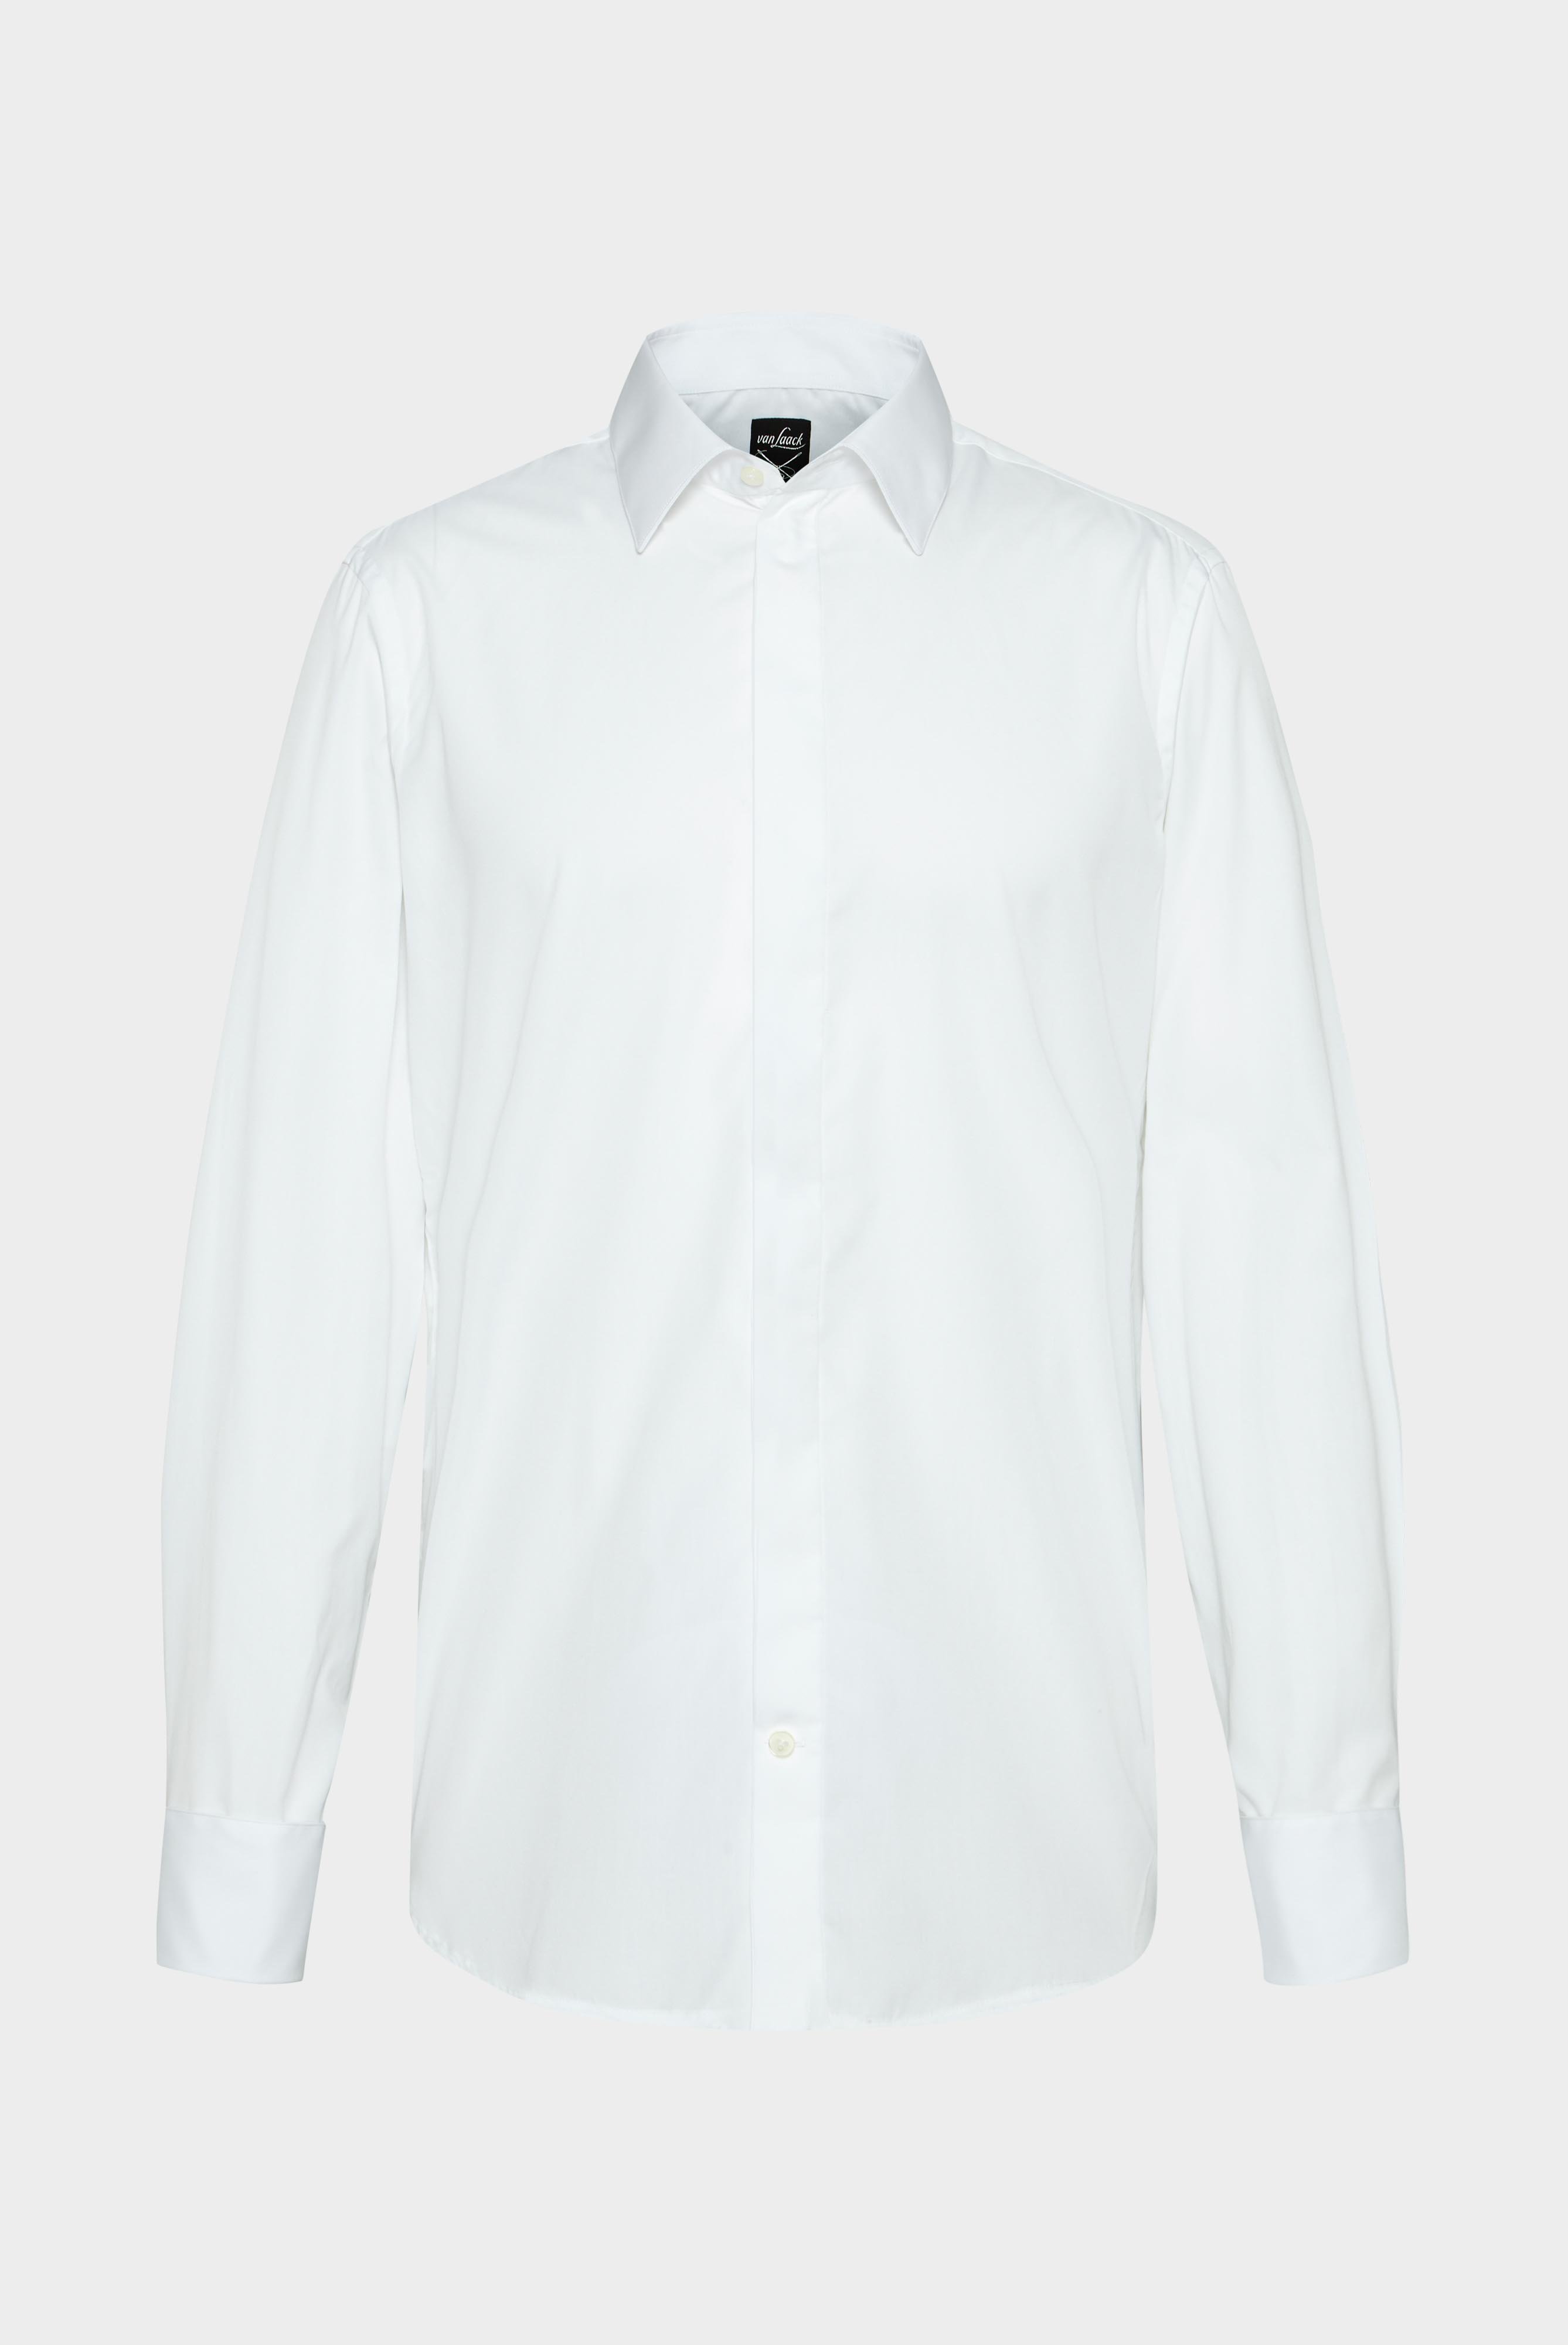 Festliche Hemden+Poplin Double Cuff Shirt+20.2062.NV.130648.000.37